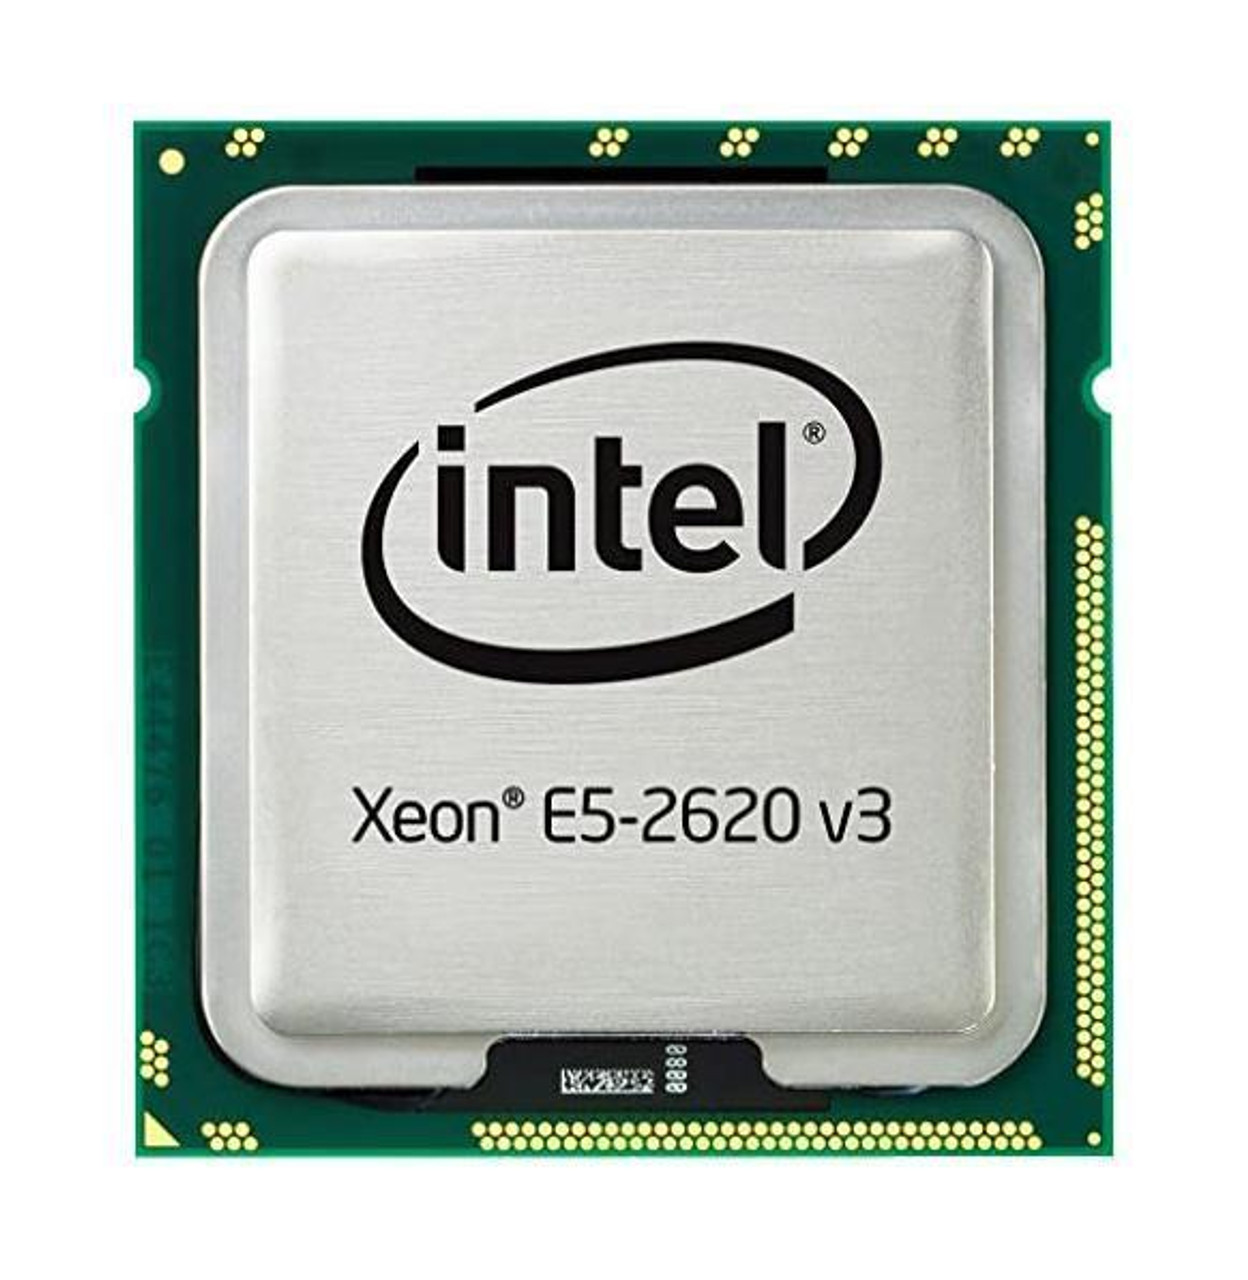 HPE 2.40GHz 8.00GT/s QPI 15MB L3 Cache Intel Xeon E5-2620 v3 6 Core Processor Upgrade for XL450 Gen9